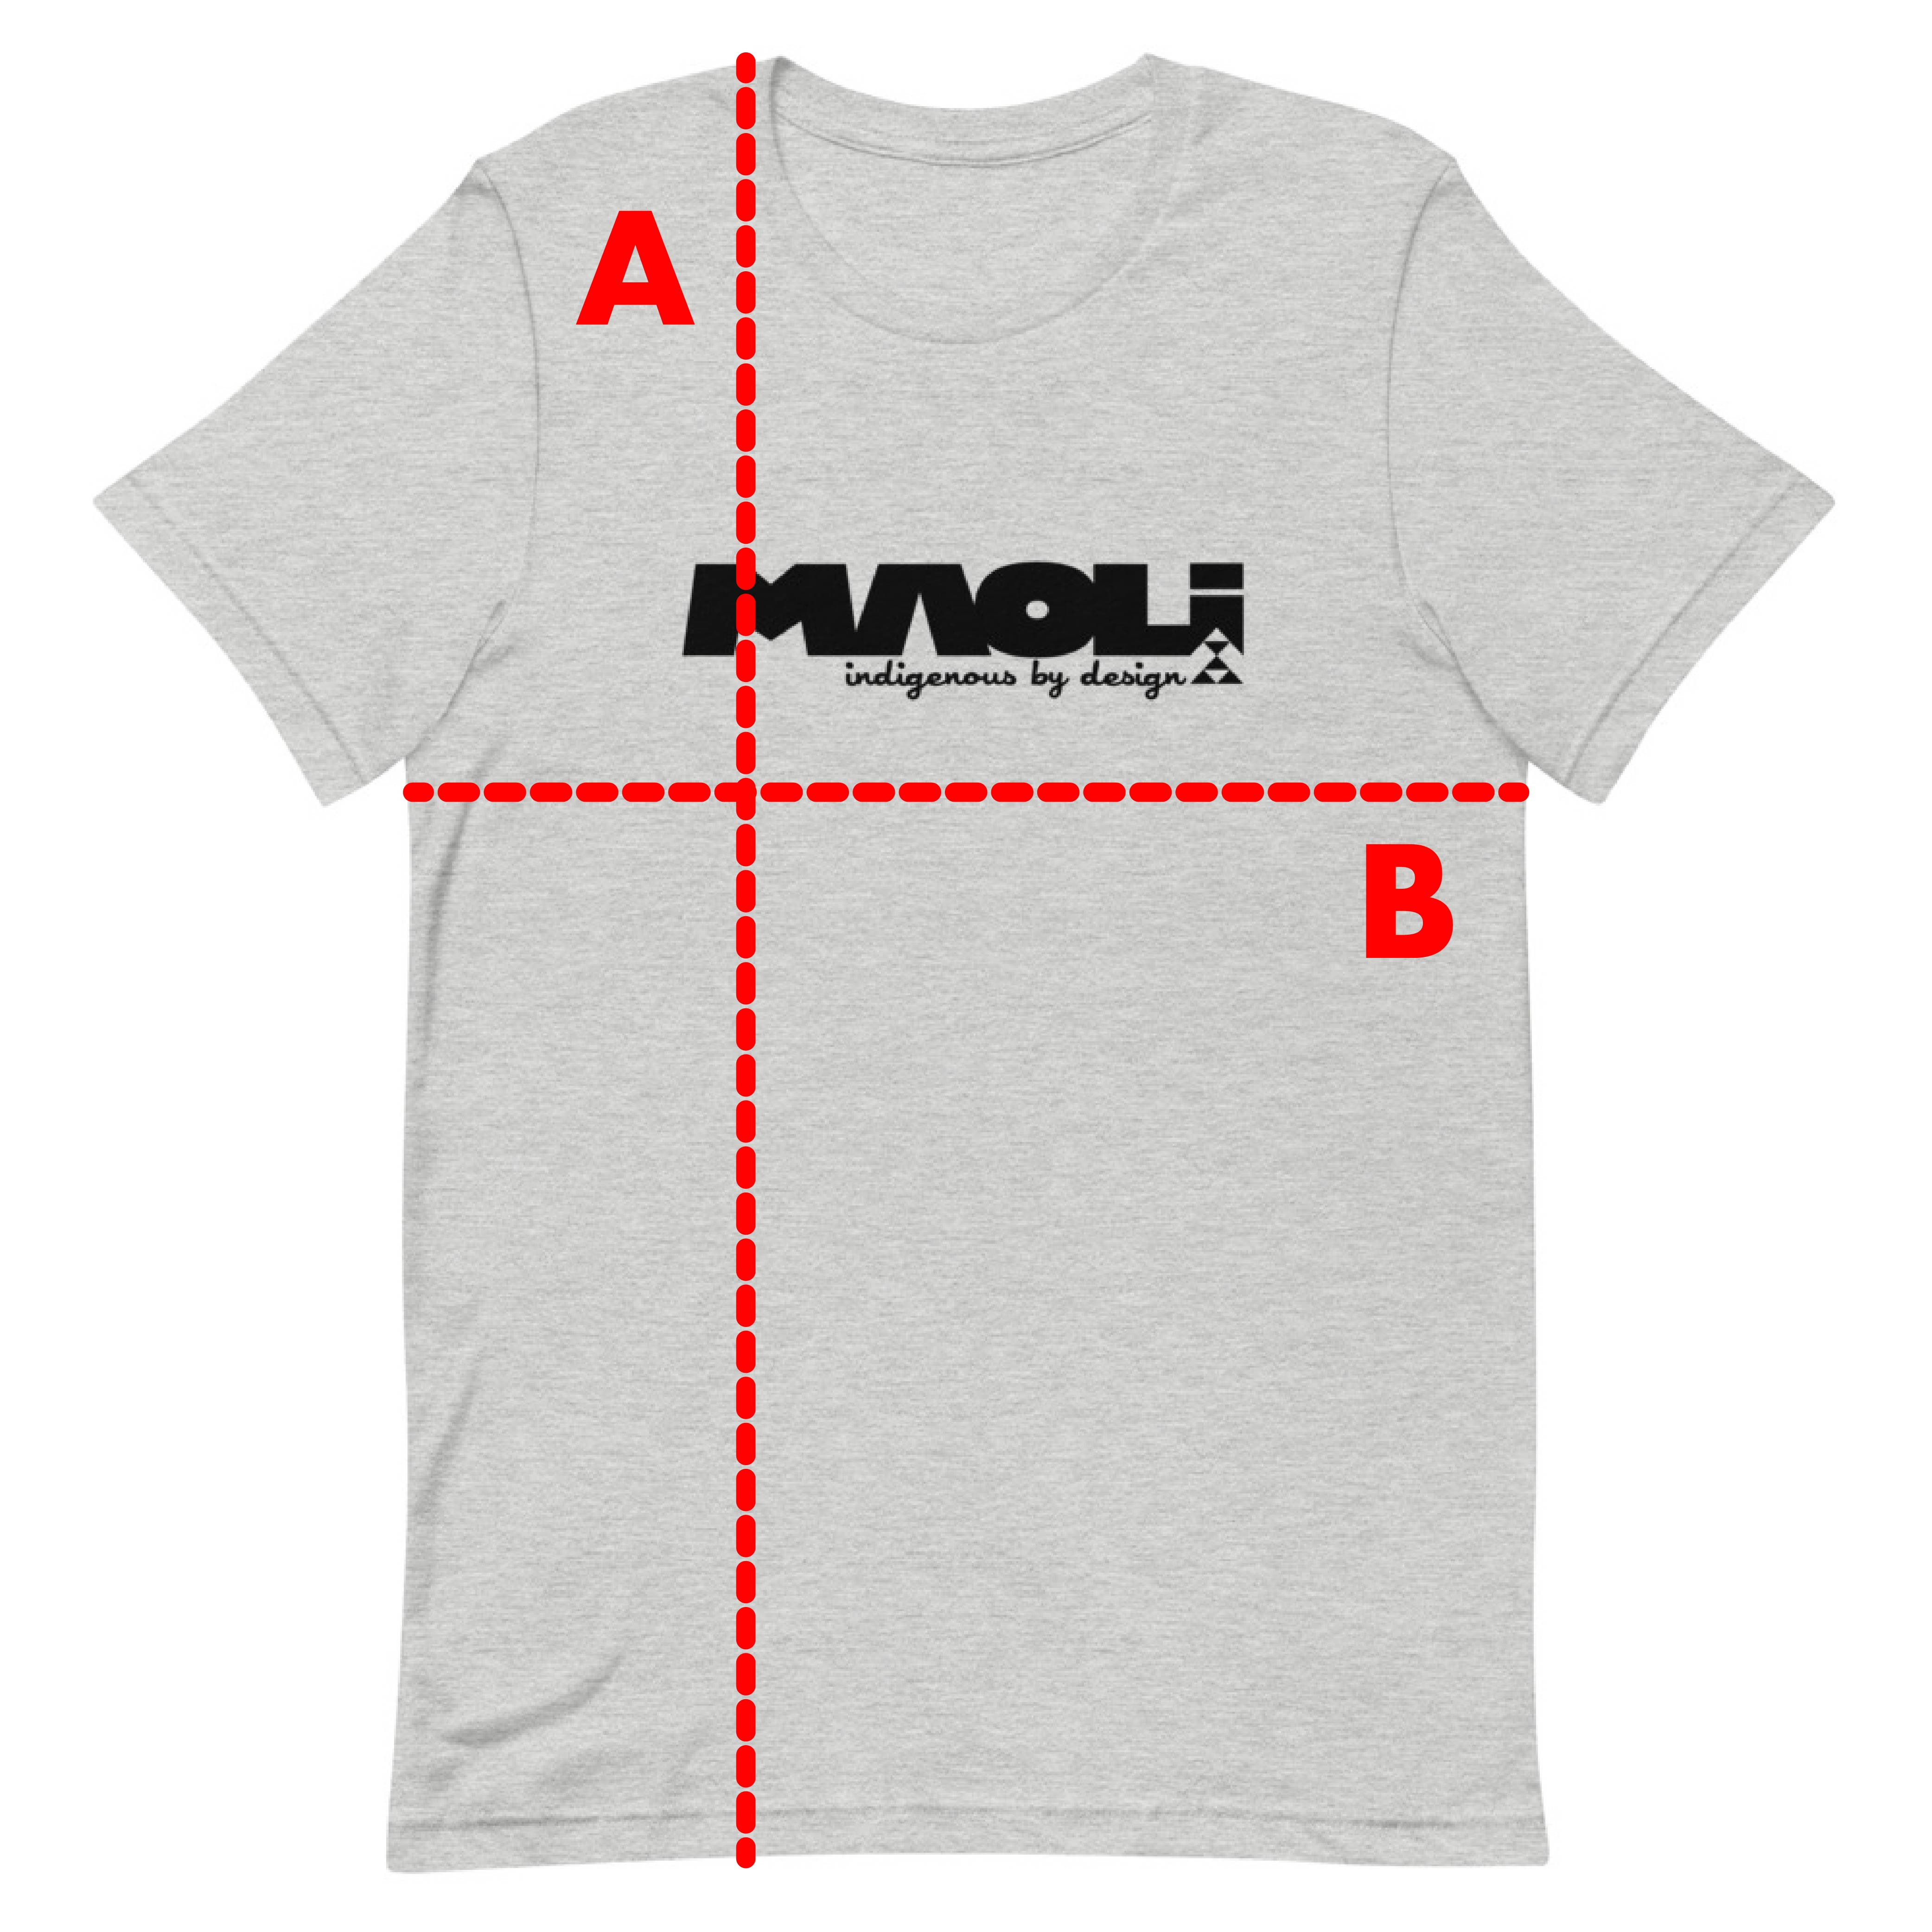 Maoli Slim-Fit Short Sleeve T-Shirt Measurements